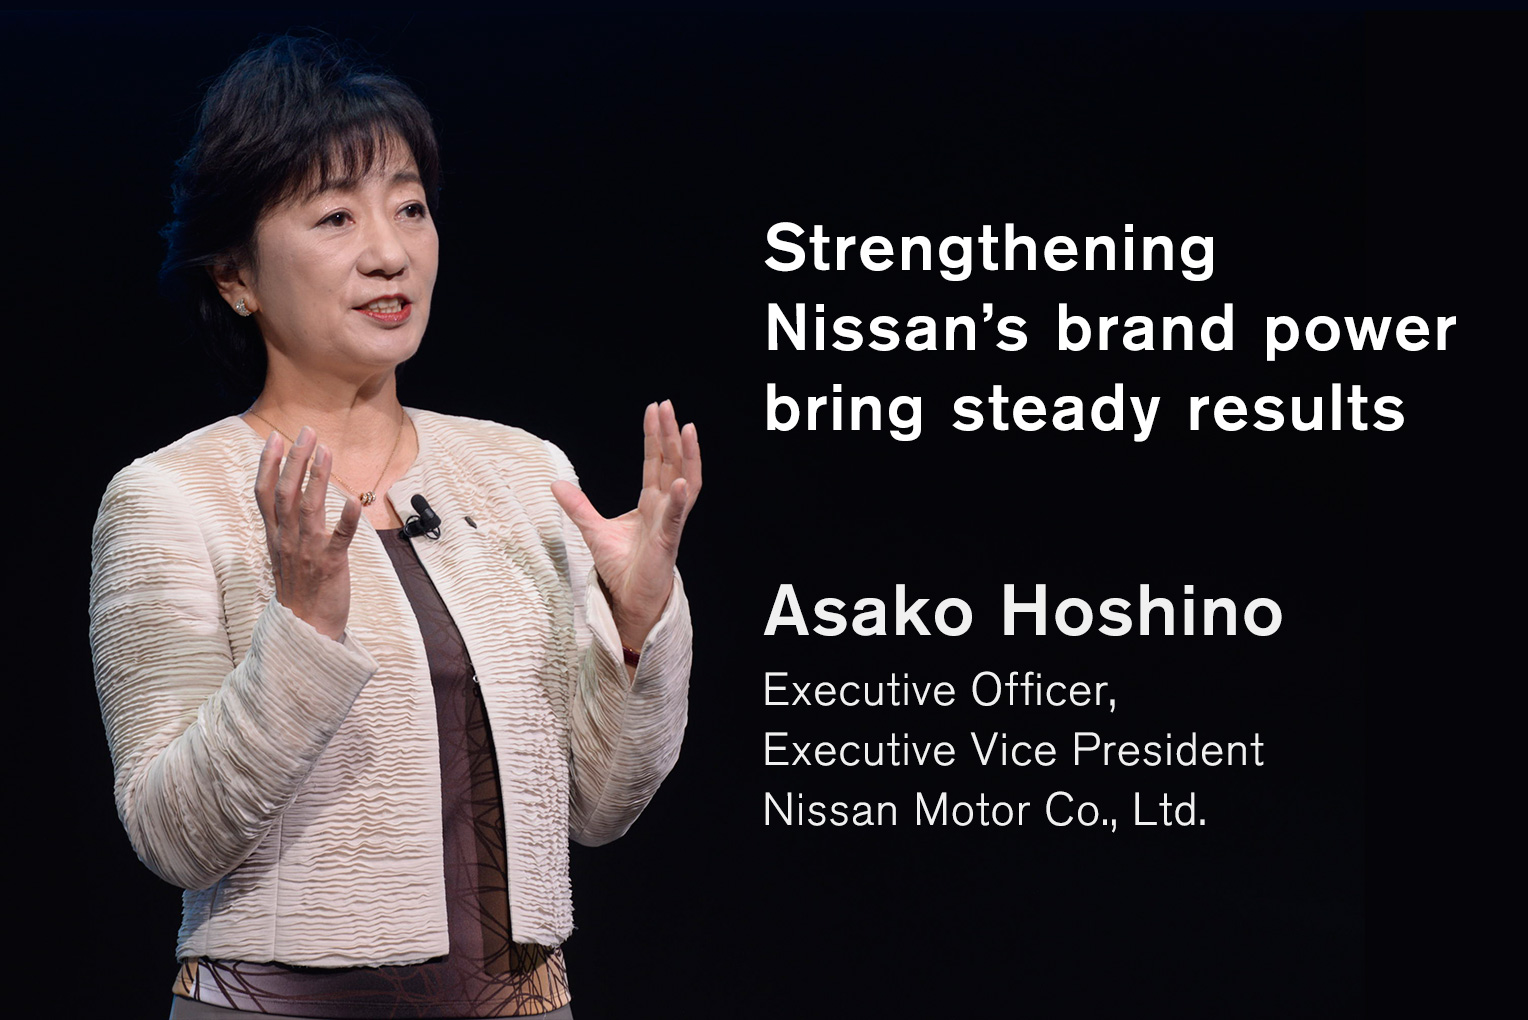 Asako Hoshino, Executive Officer and Executive Vice President